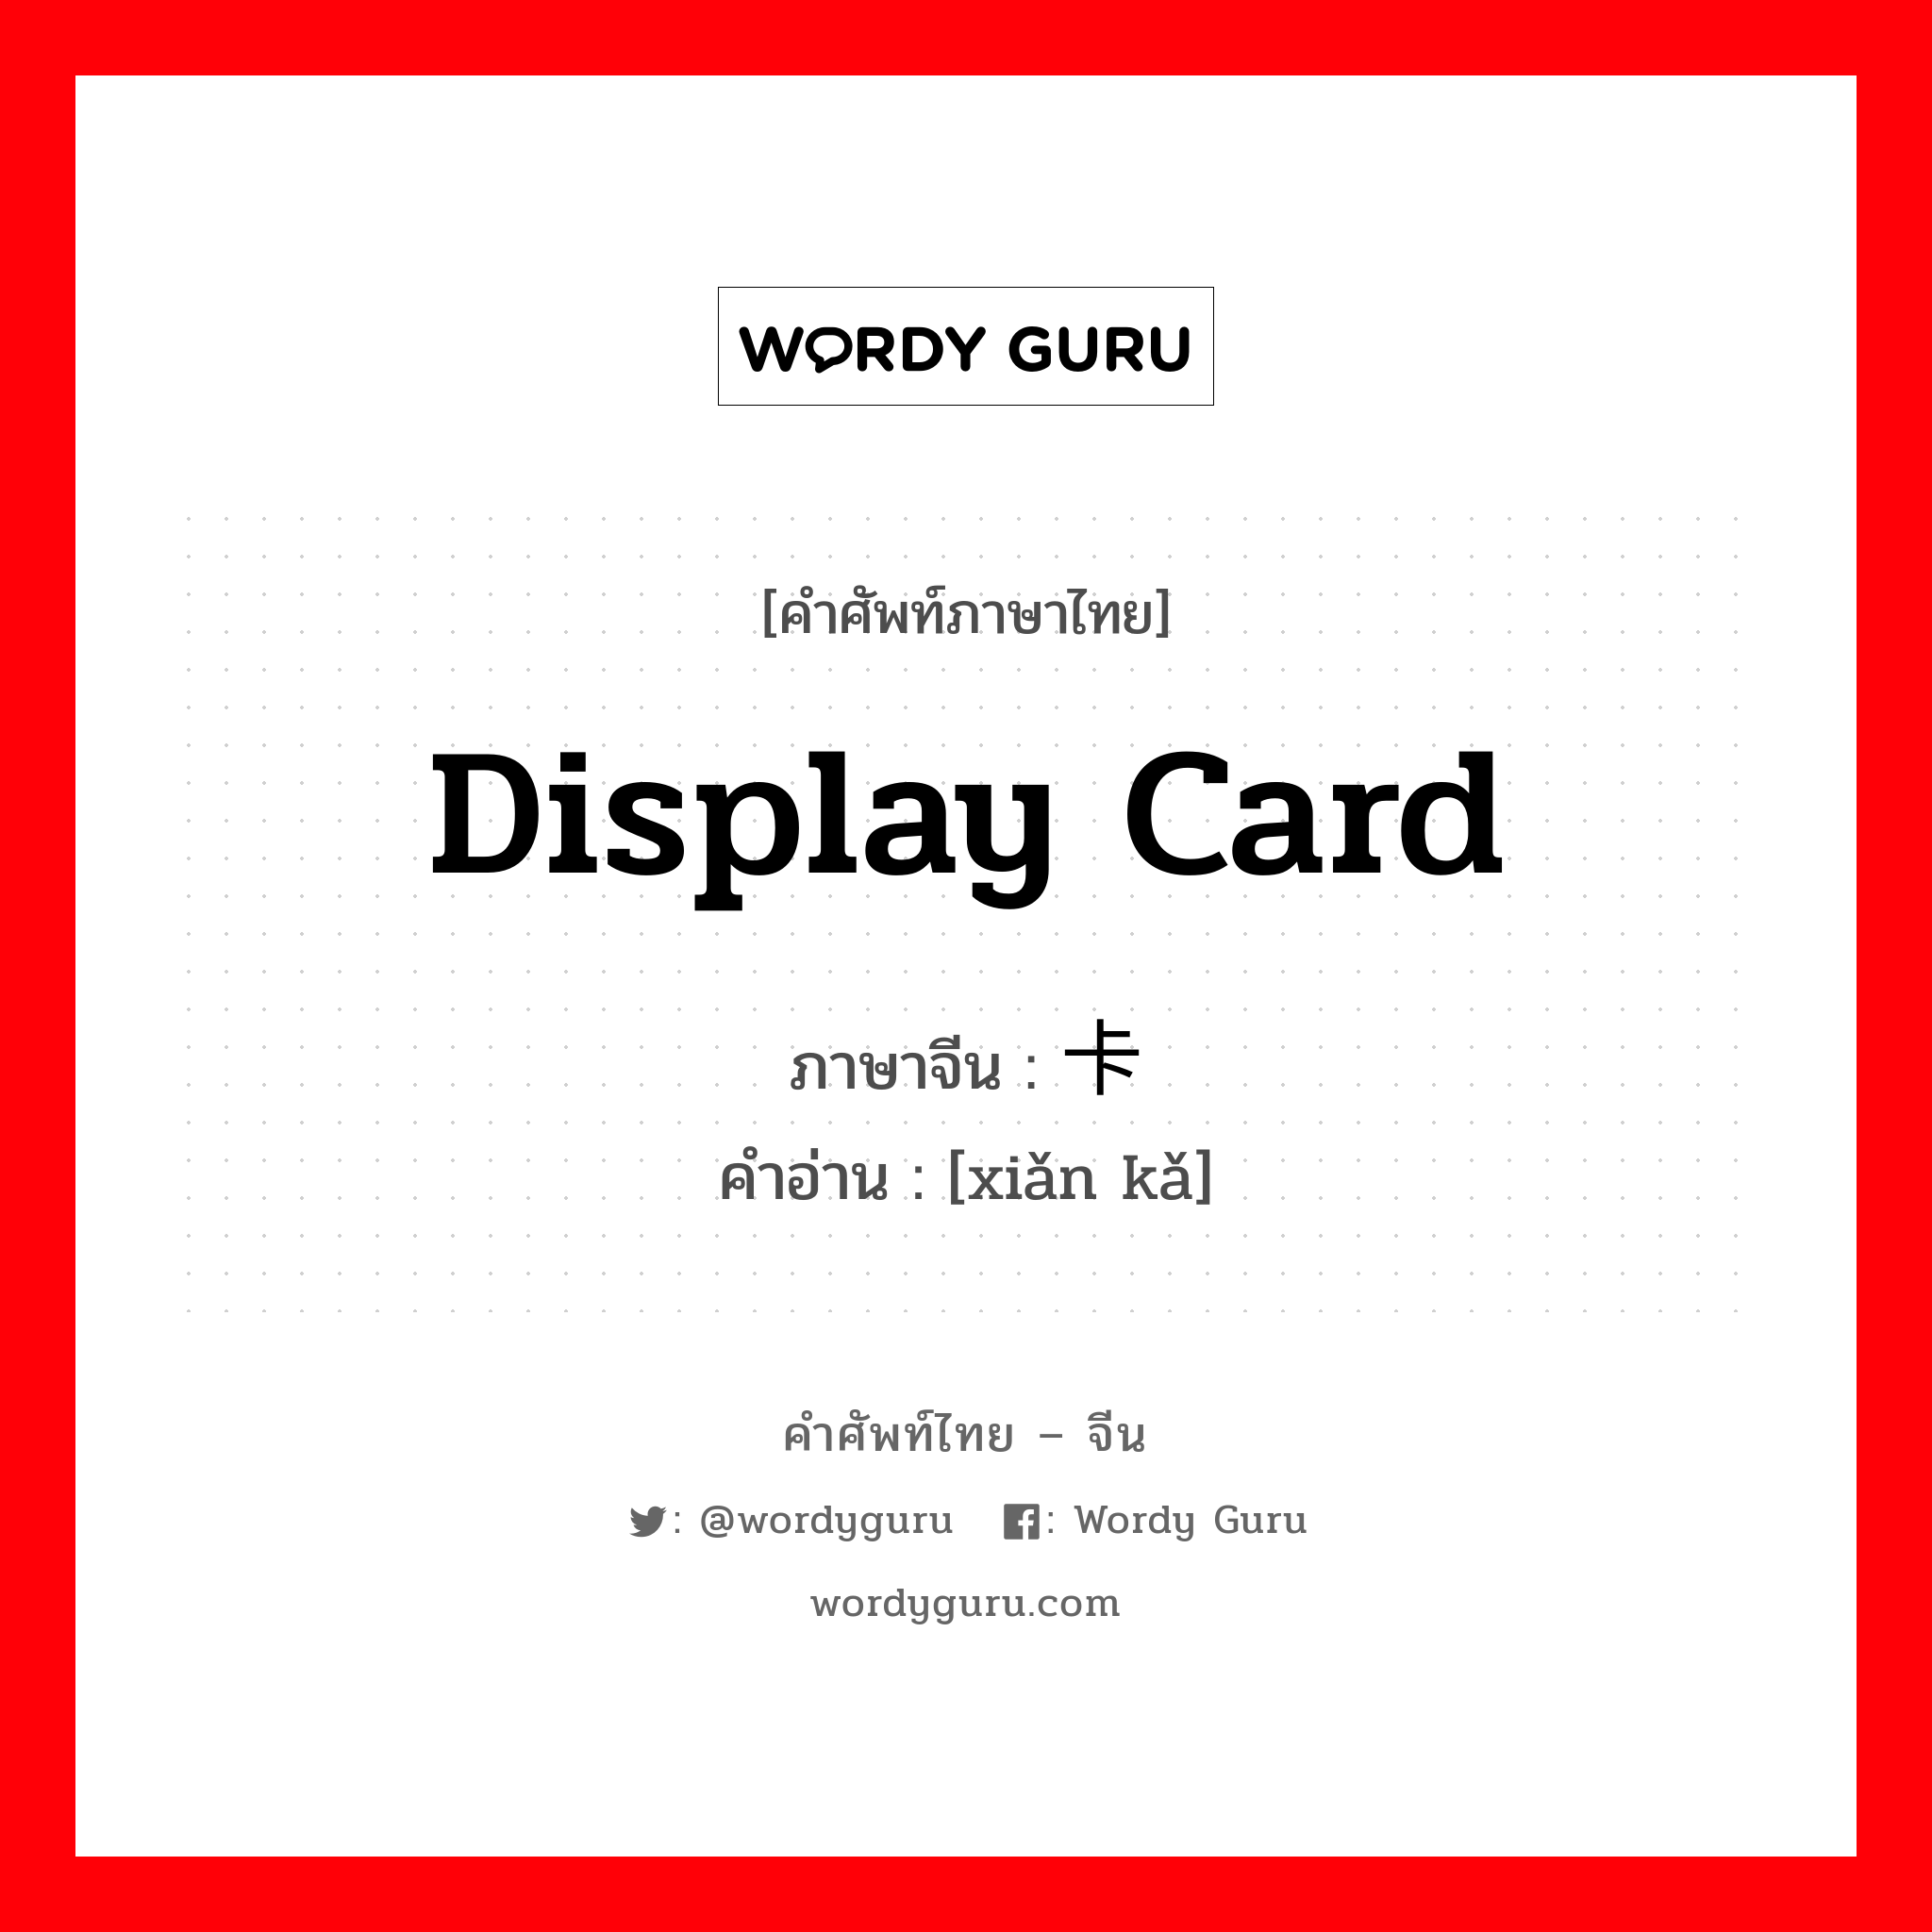 display card ภาษาจีนคืออะไร, คำศัพท์ภาษาไทย - จีน display card ภาษาจีน 显卡 คำอ่าน [xiǎn kǎ]